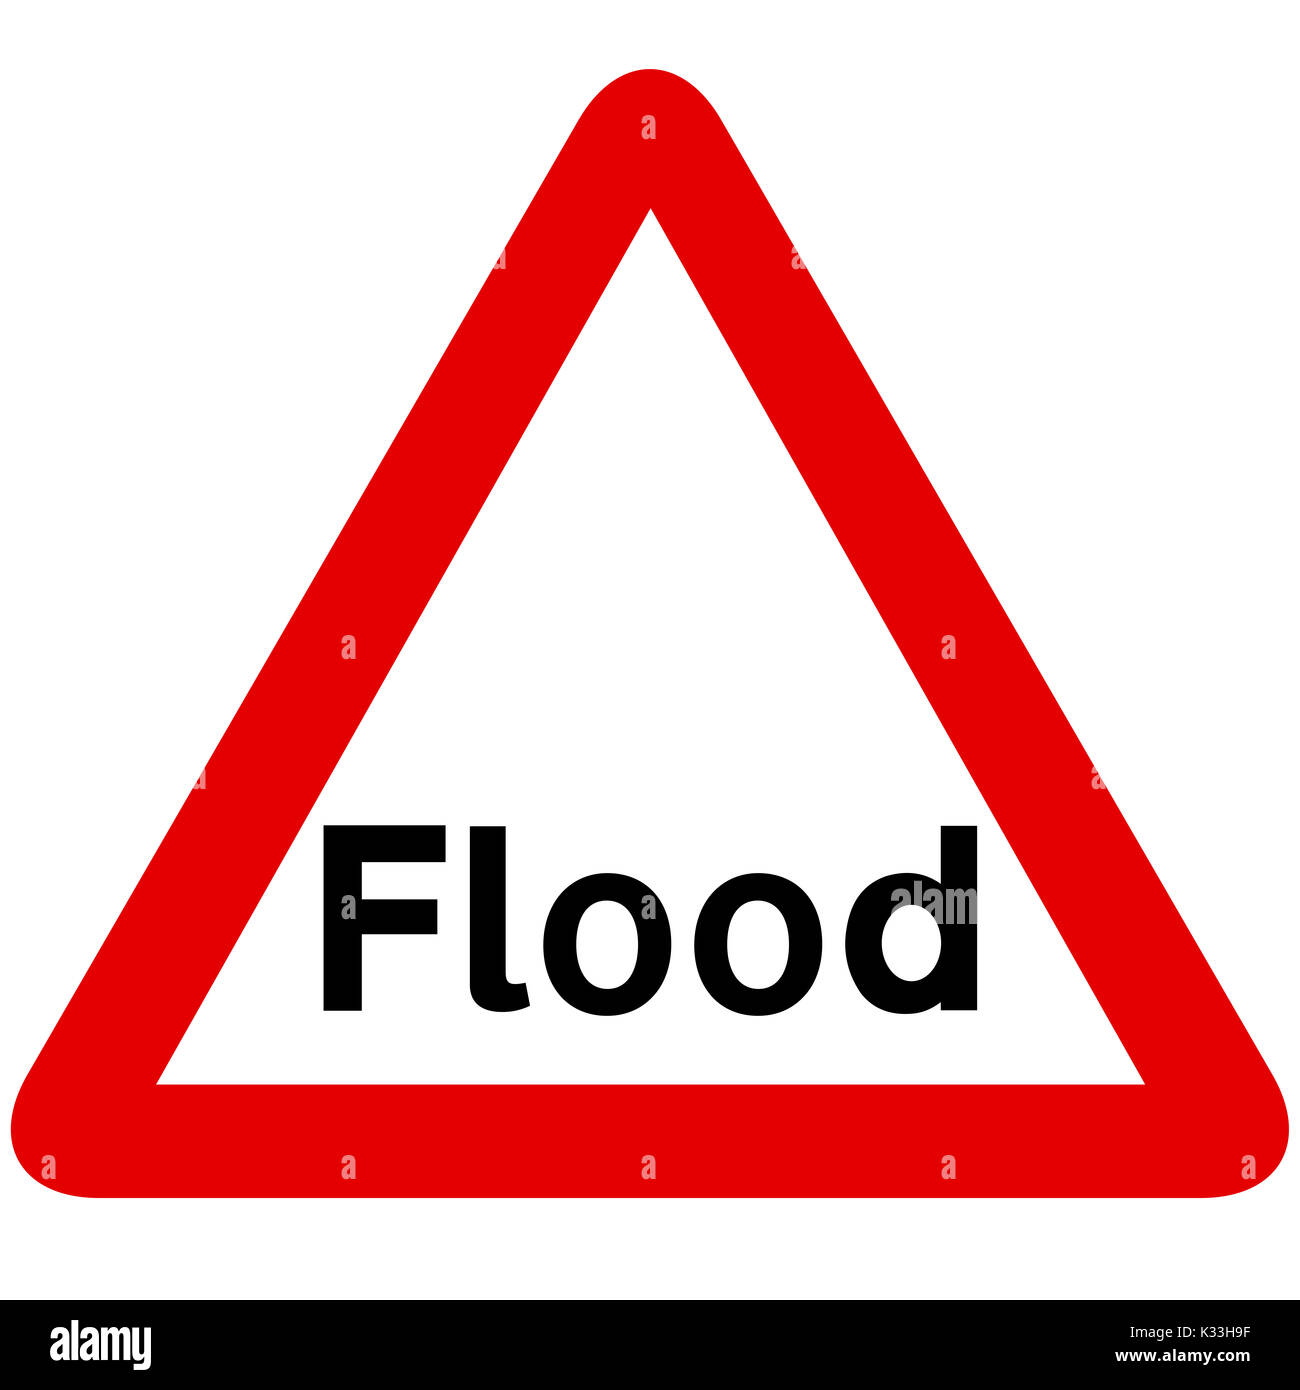 Flood cartello stradale su sfondo bianco Foto Stock